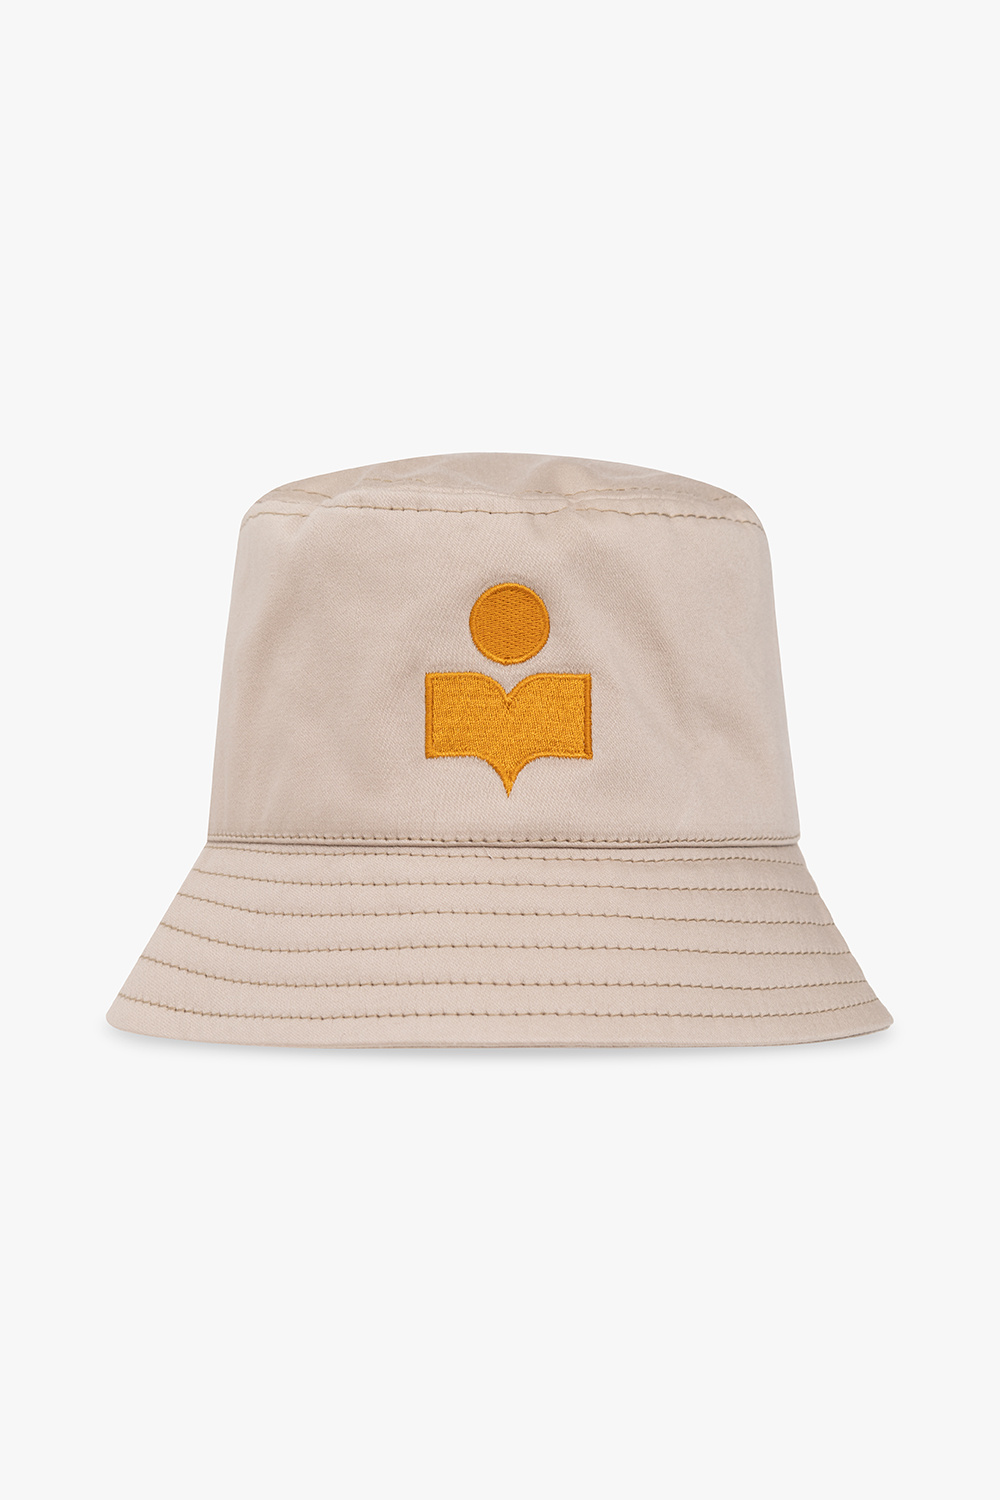 MARANT Bucket Jordan hat with logo